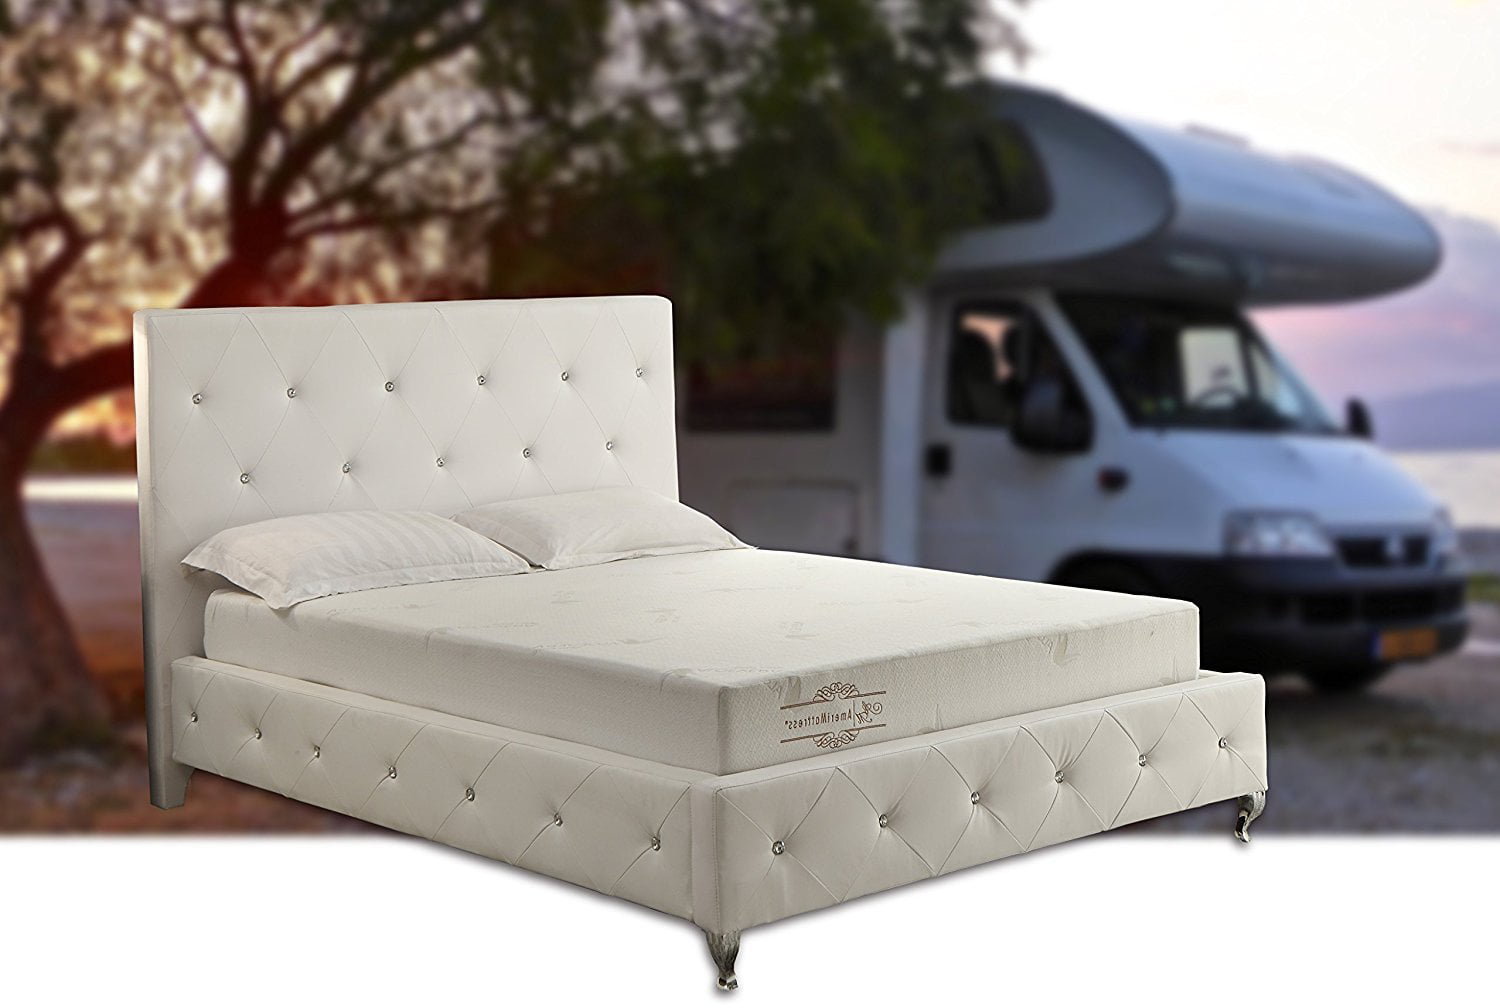 are camper mattresses the same size